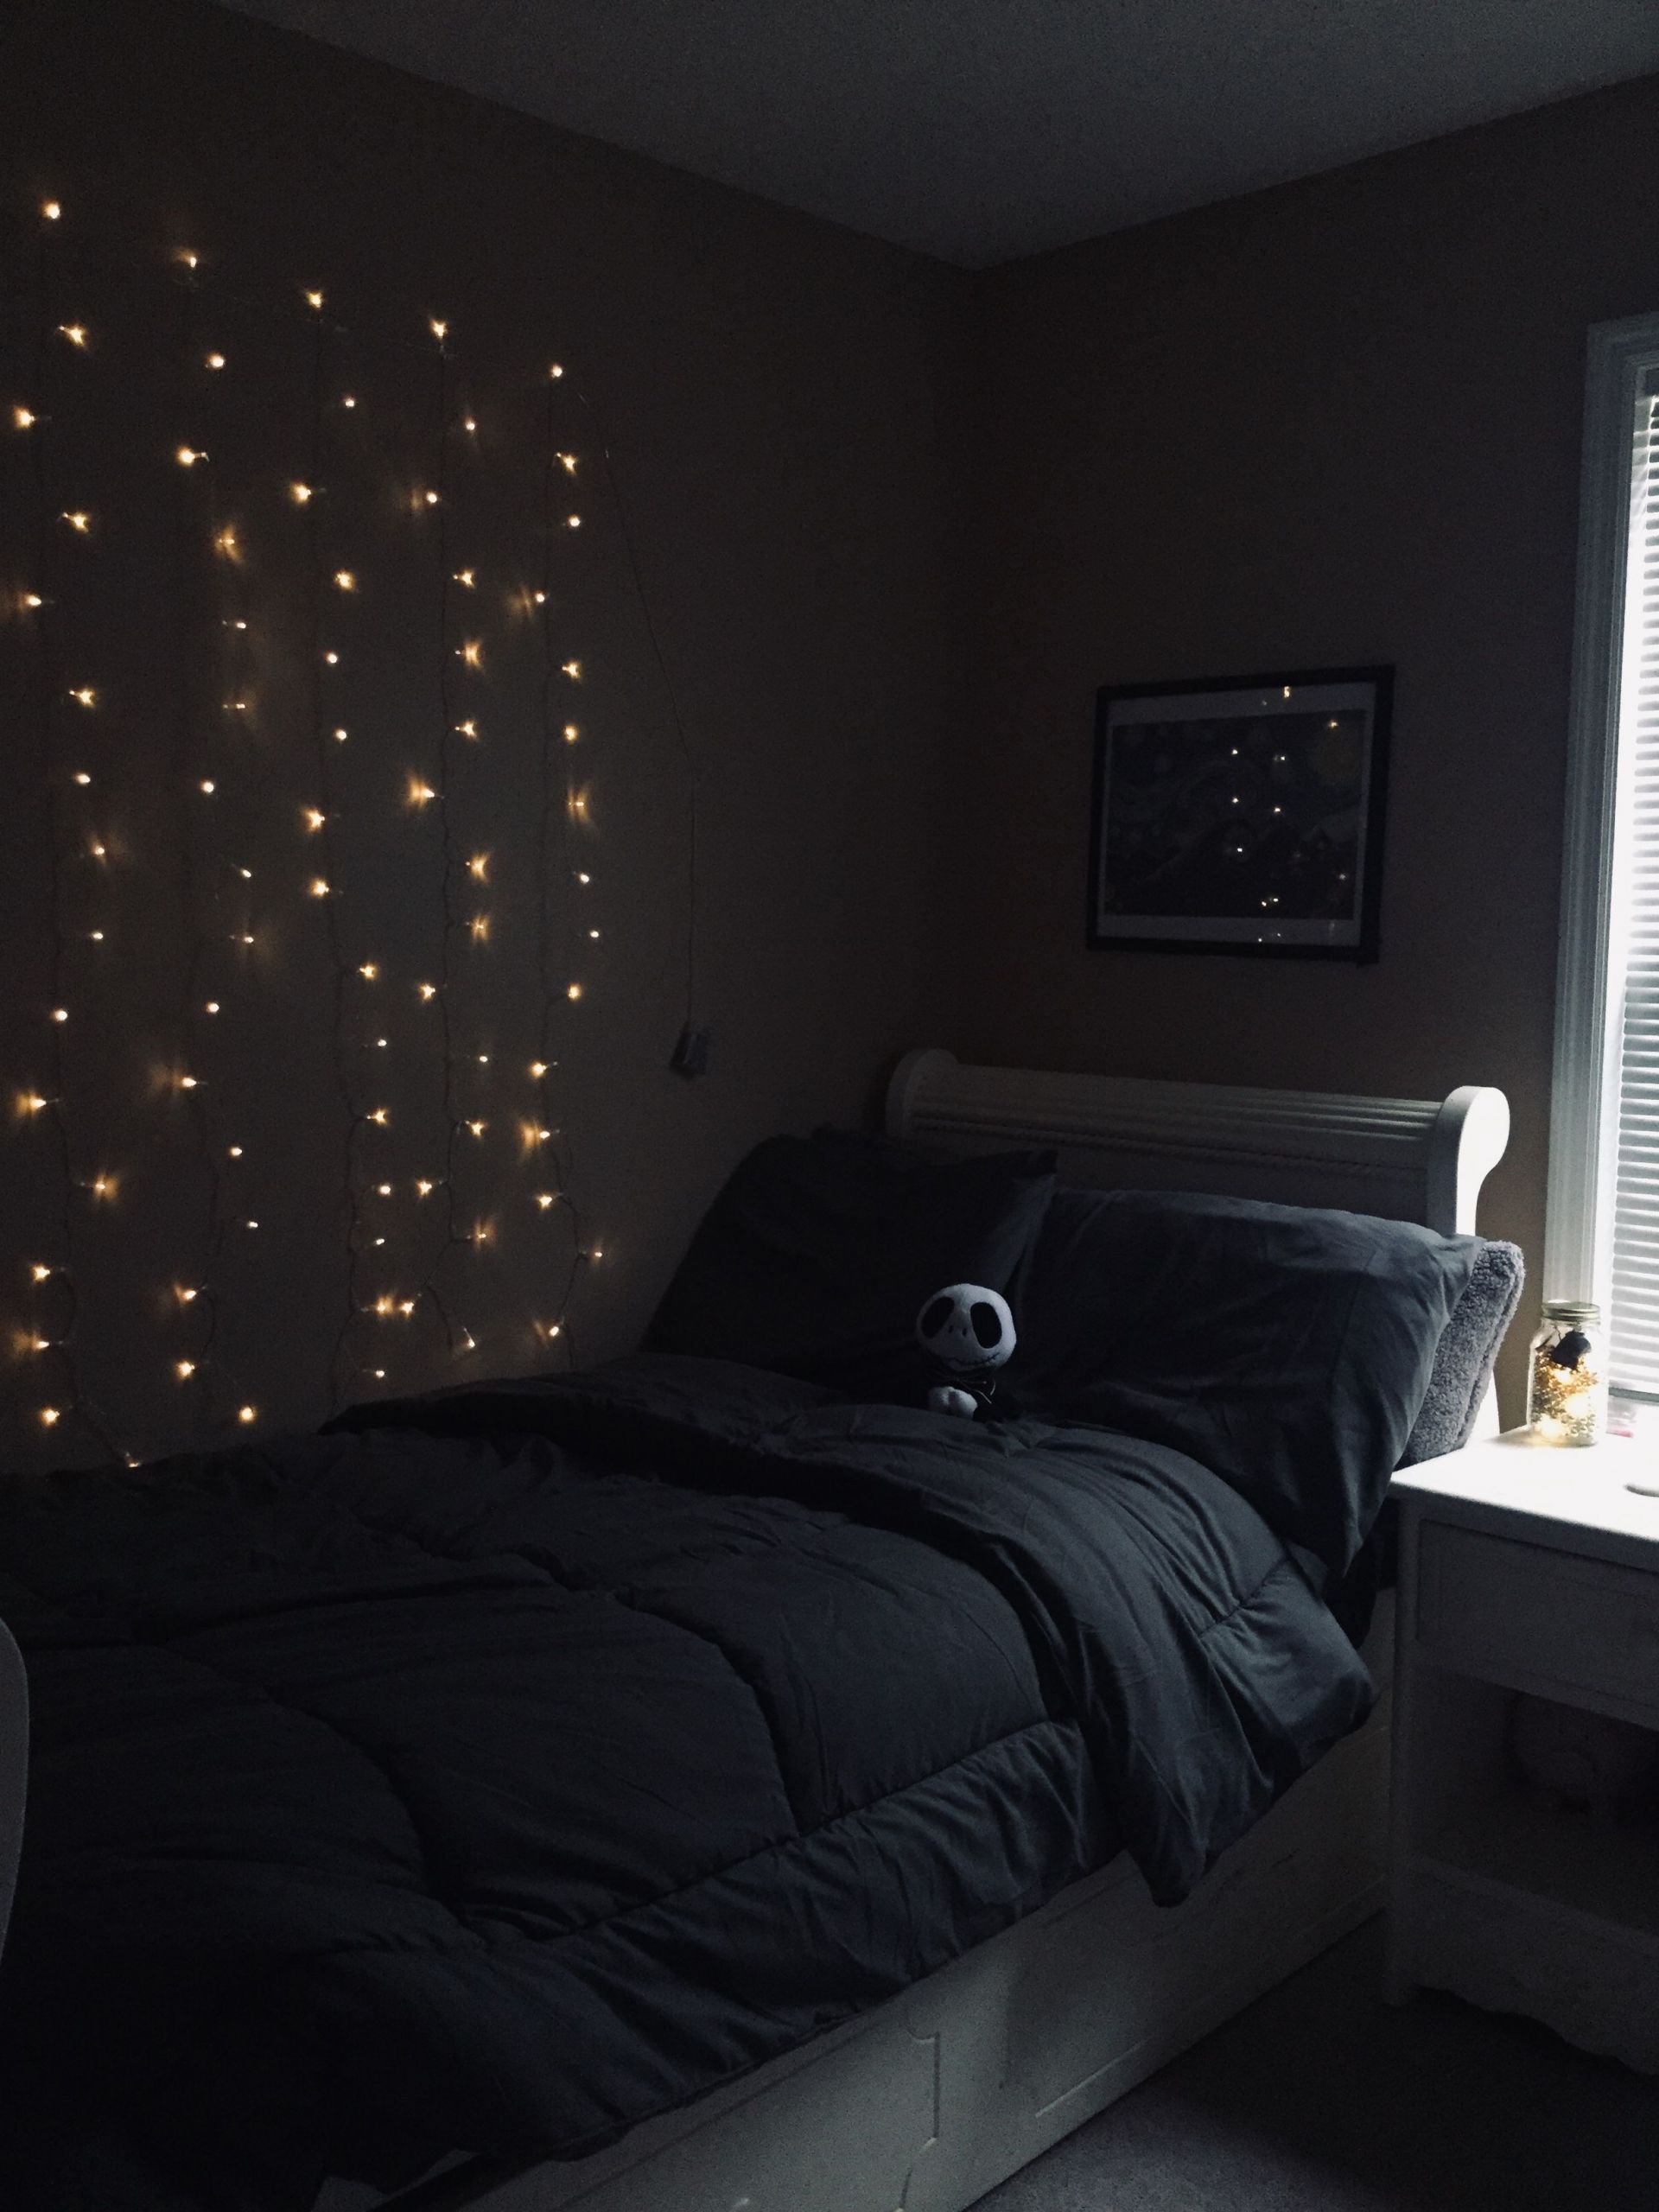 DIY Emo Room Decor
 Emo Aesthetic bedroom in 2019